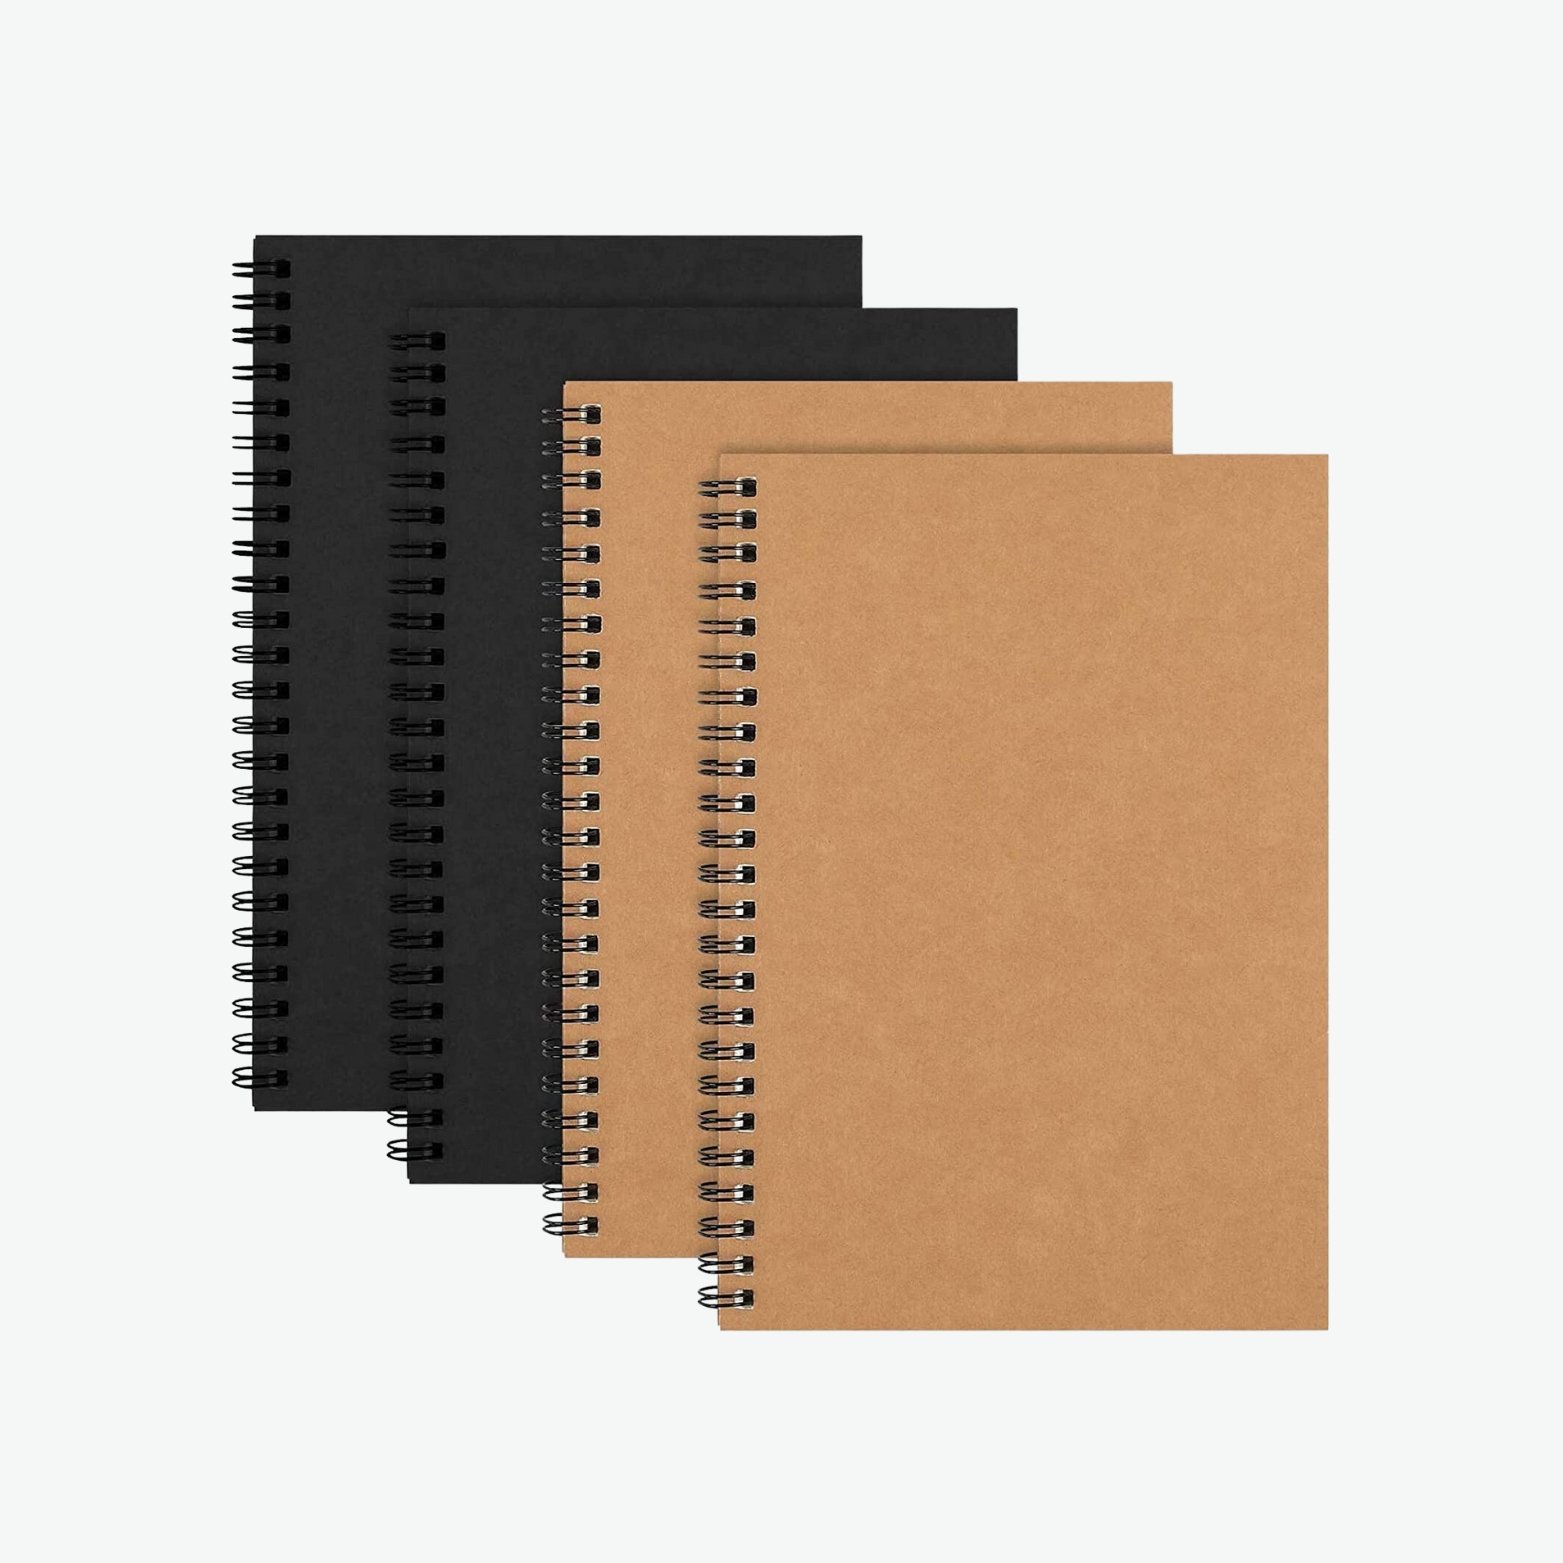 Notebooks copy.jpg